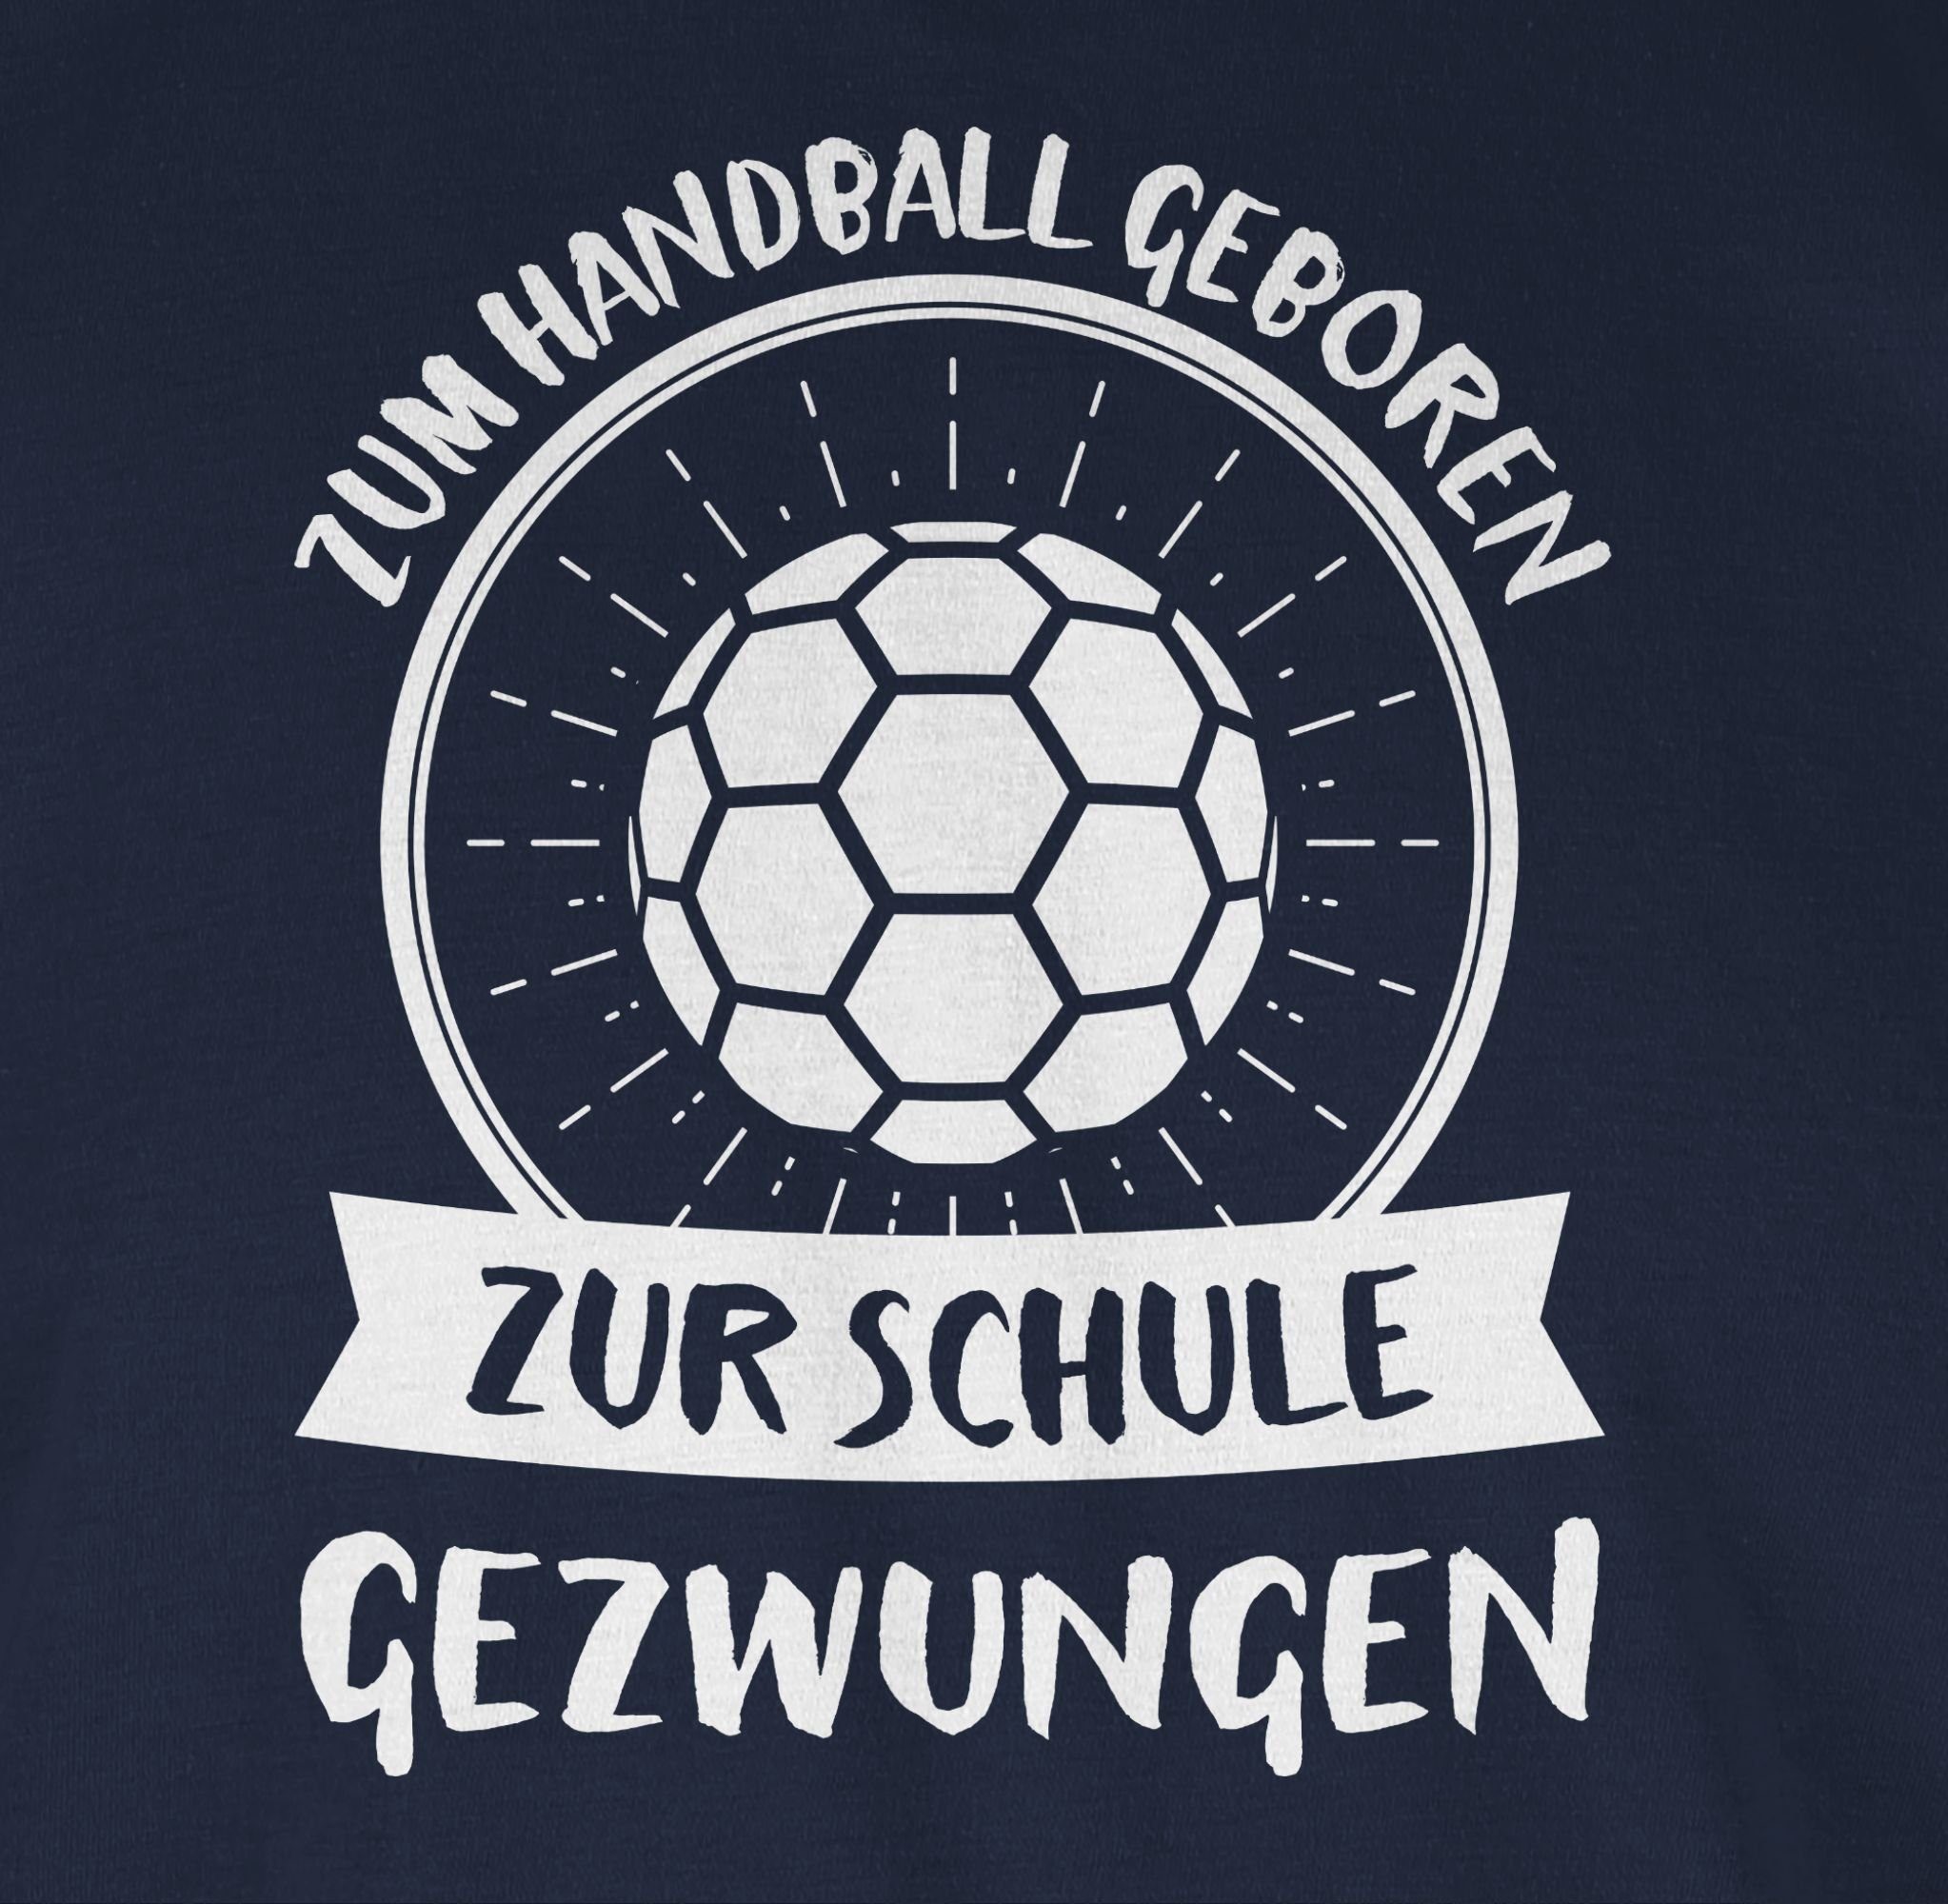 2023 Navy Zum gezwungen Schule Handball Blau Shirtracer Trikot Ersatz T-Shirt Handball geboren zur 2 WM